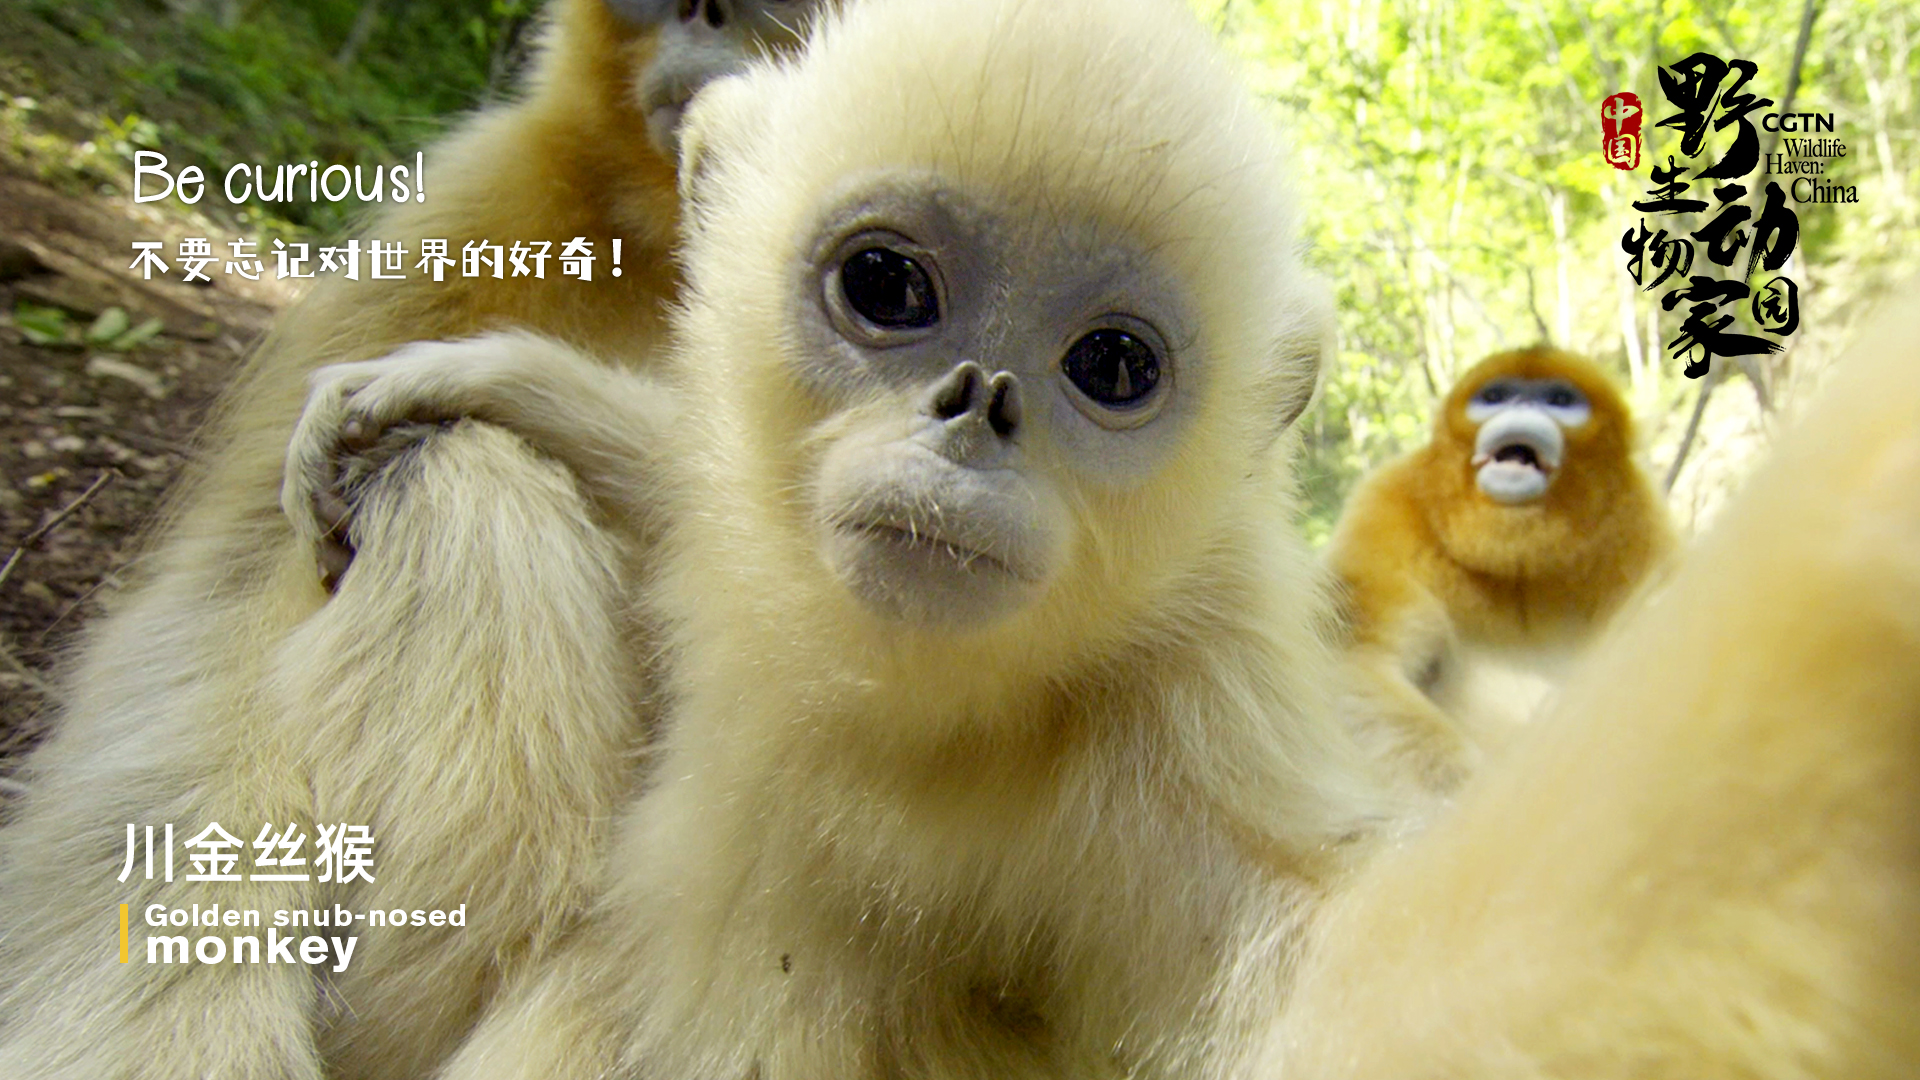 CGTN's 8K 'Wildlife Haven: China' reveals China's amazing biodiversity